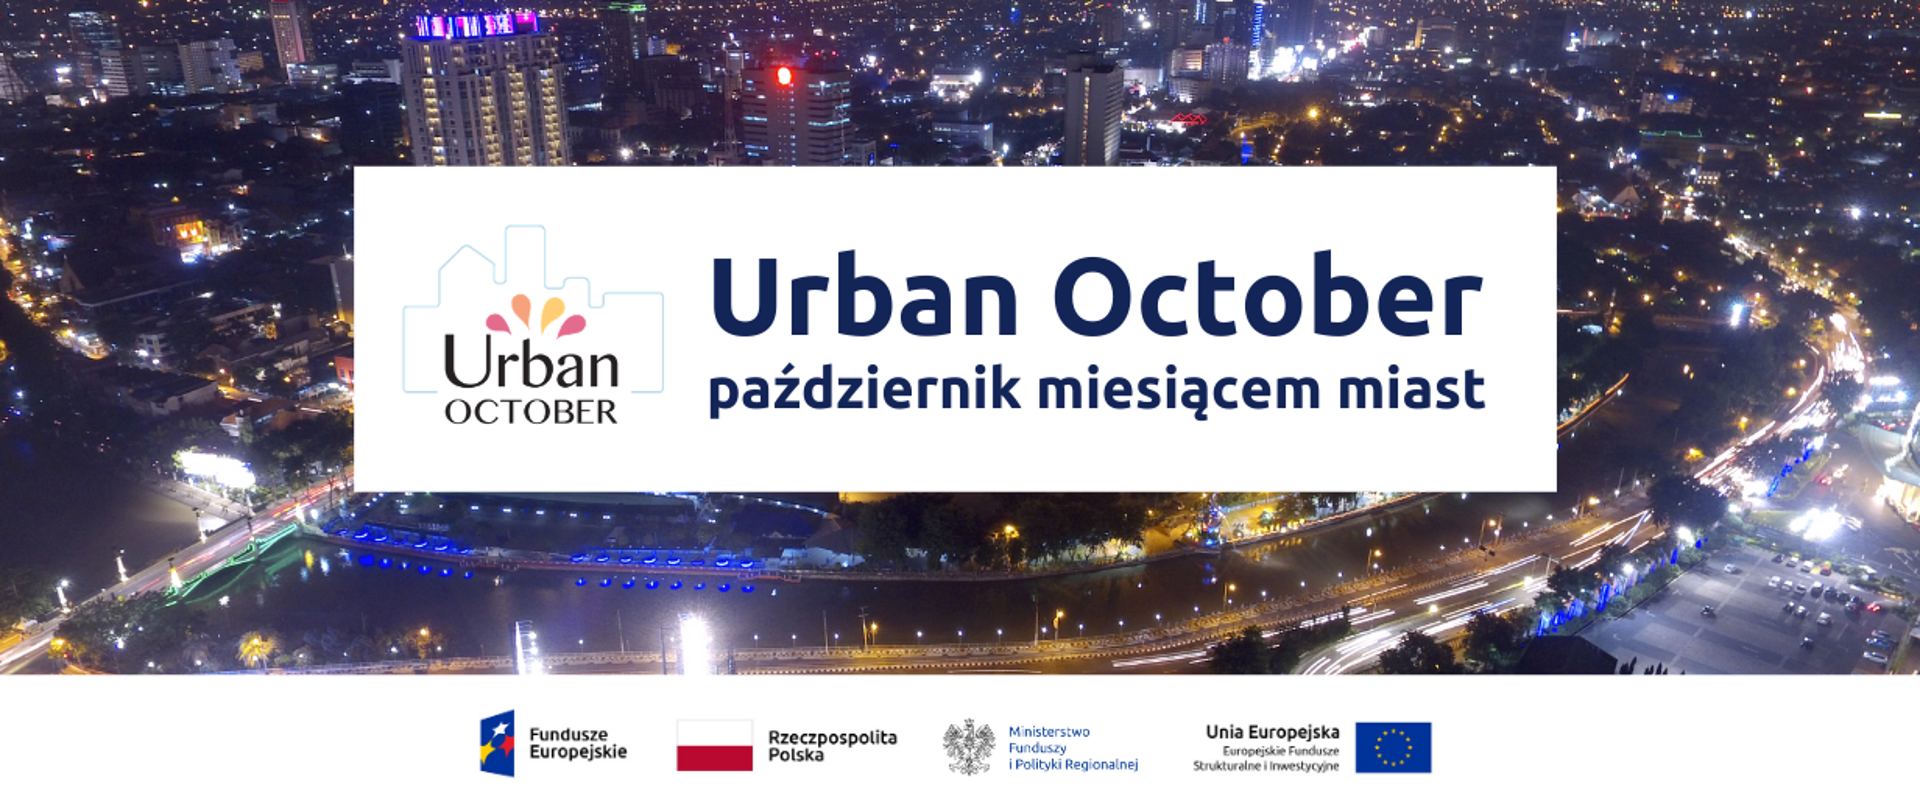 Zdjęcie miasta oraz napis "Urban October - październik miesiącem miast"